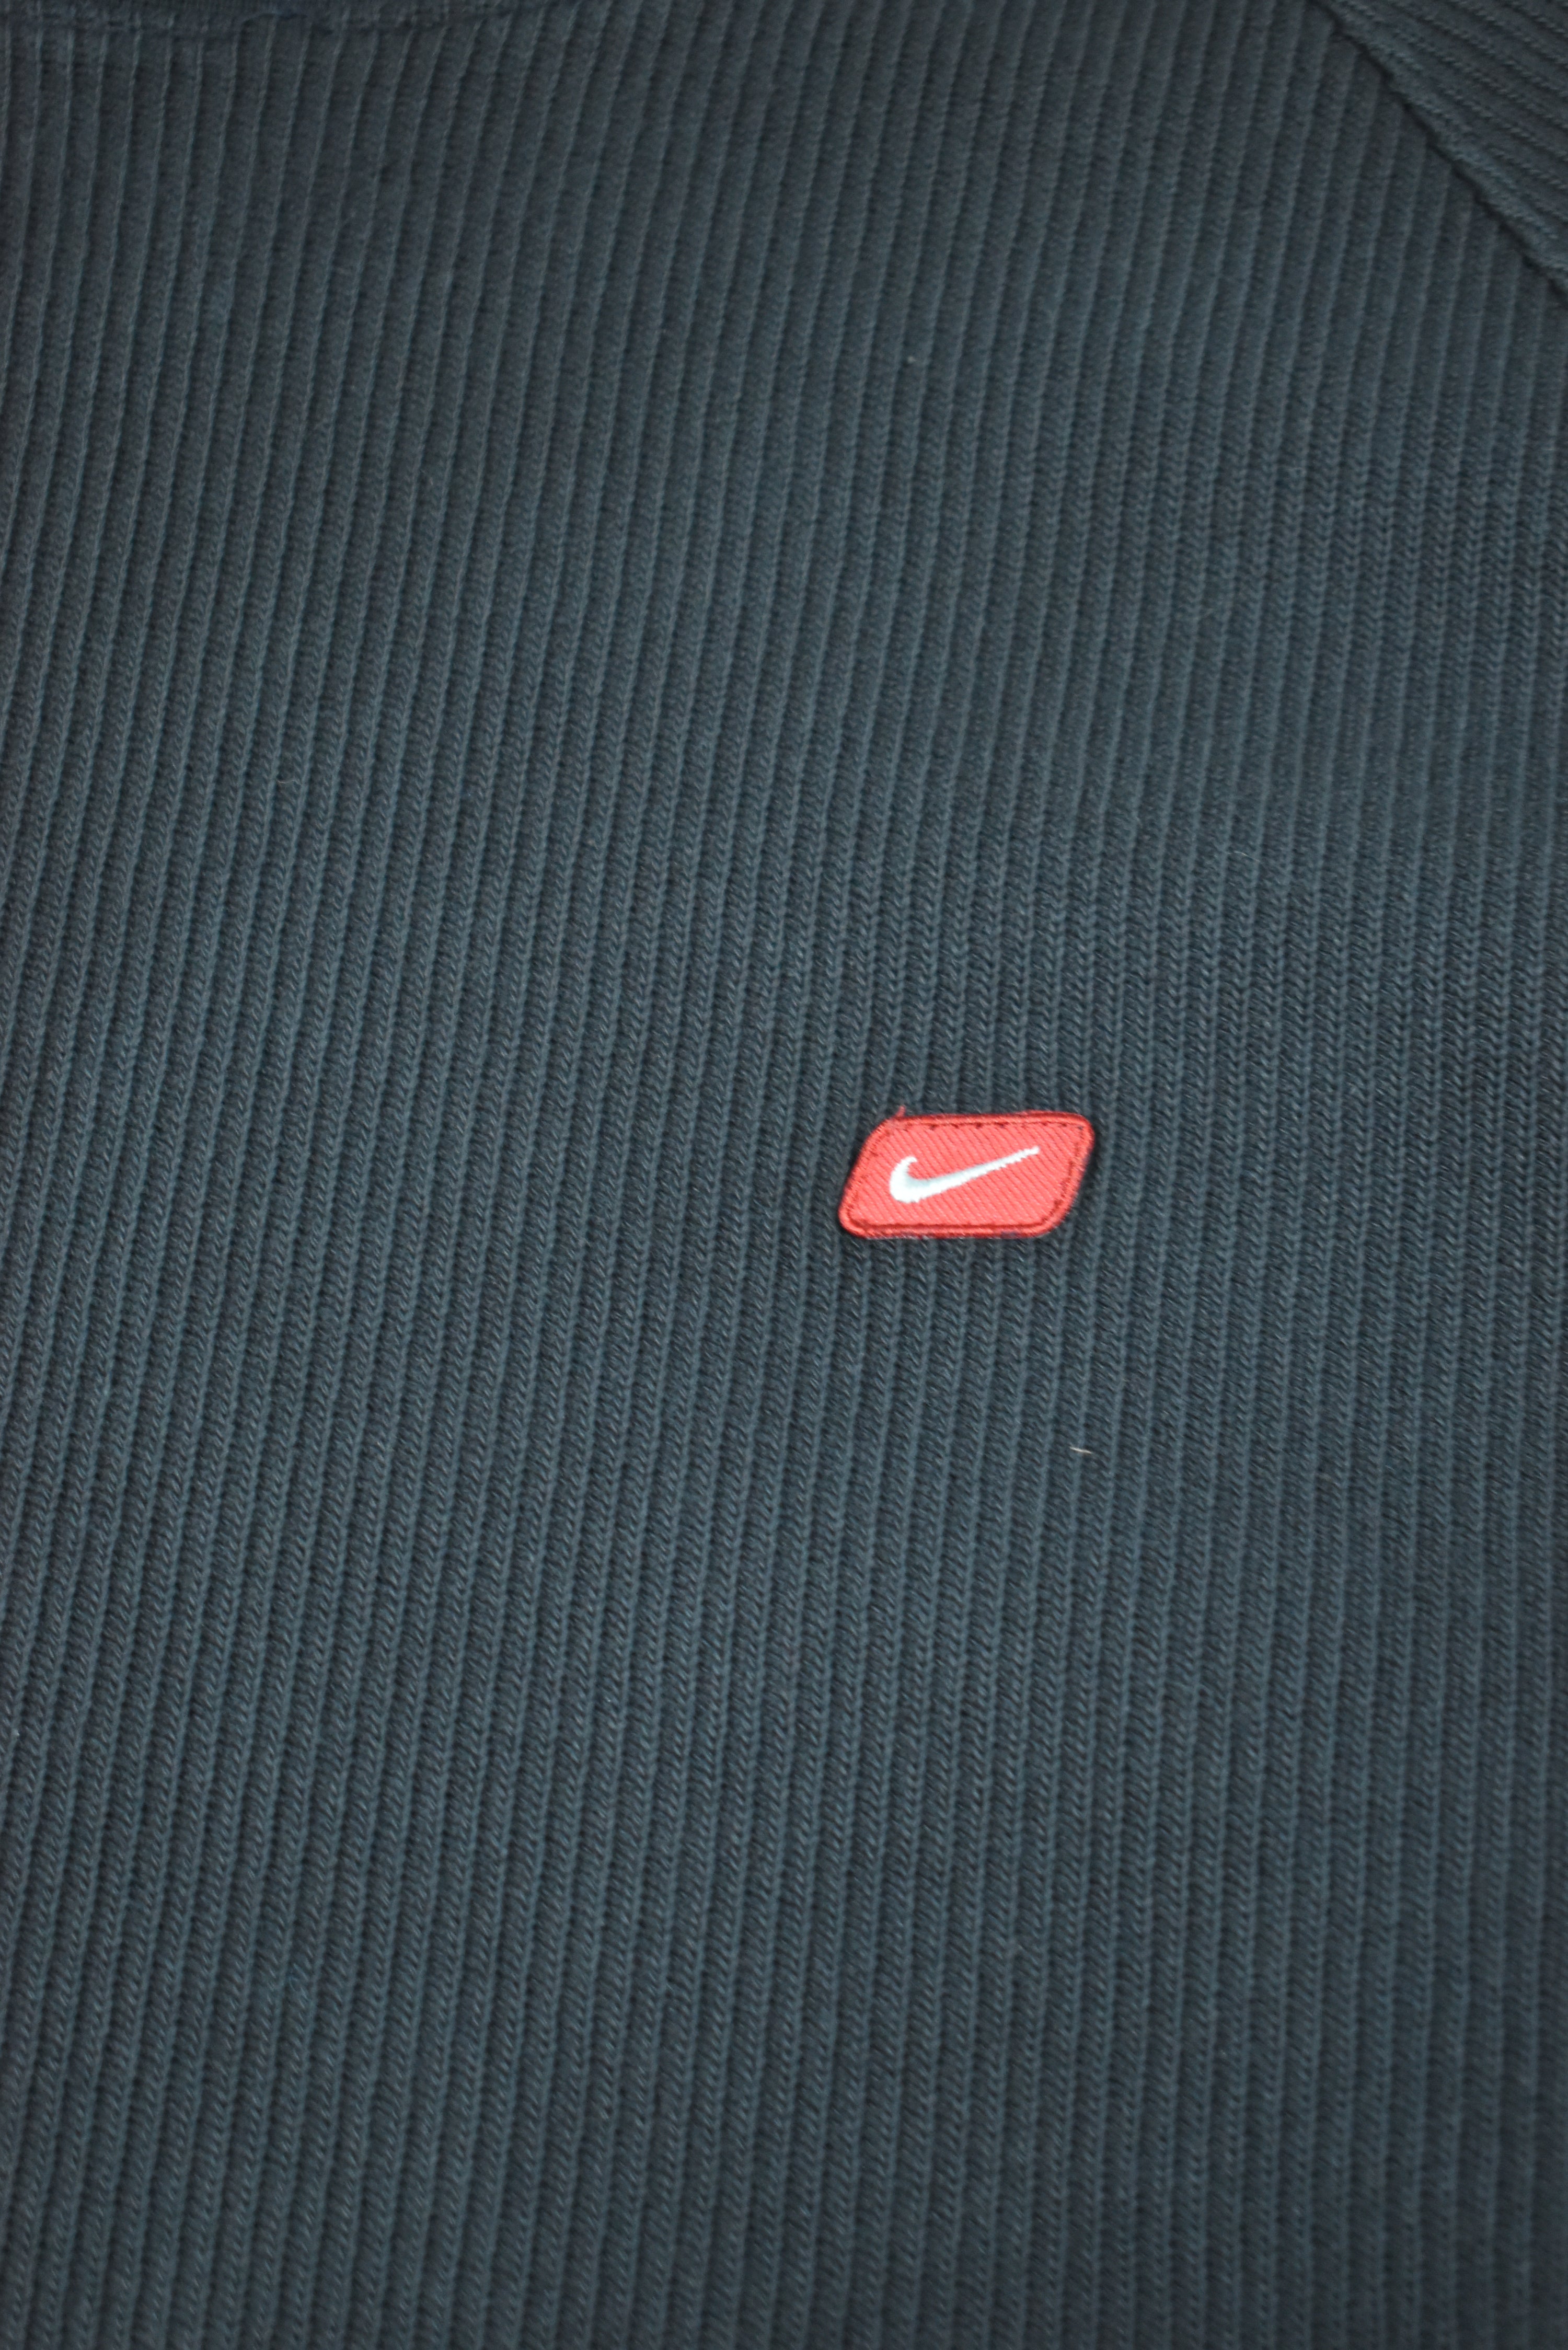 Vintage Nike Embrodiery Cord Sweatshirt Xlarge